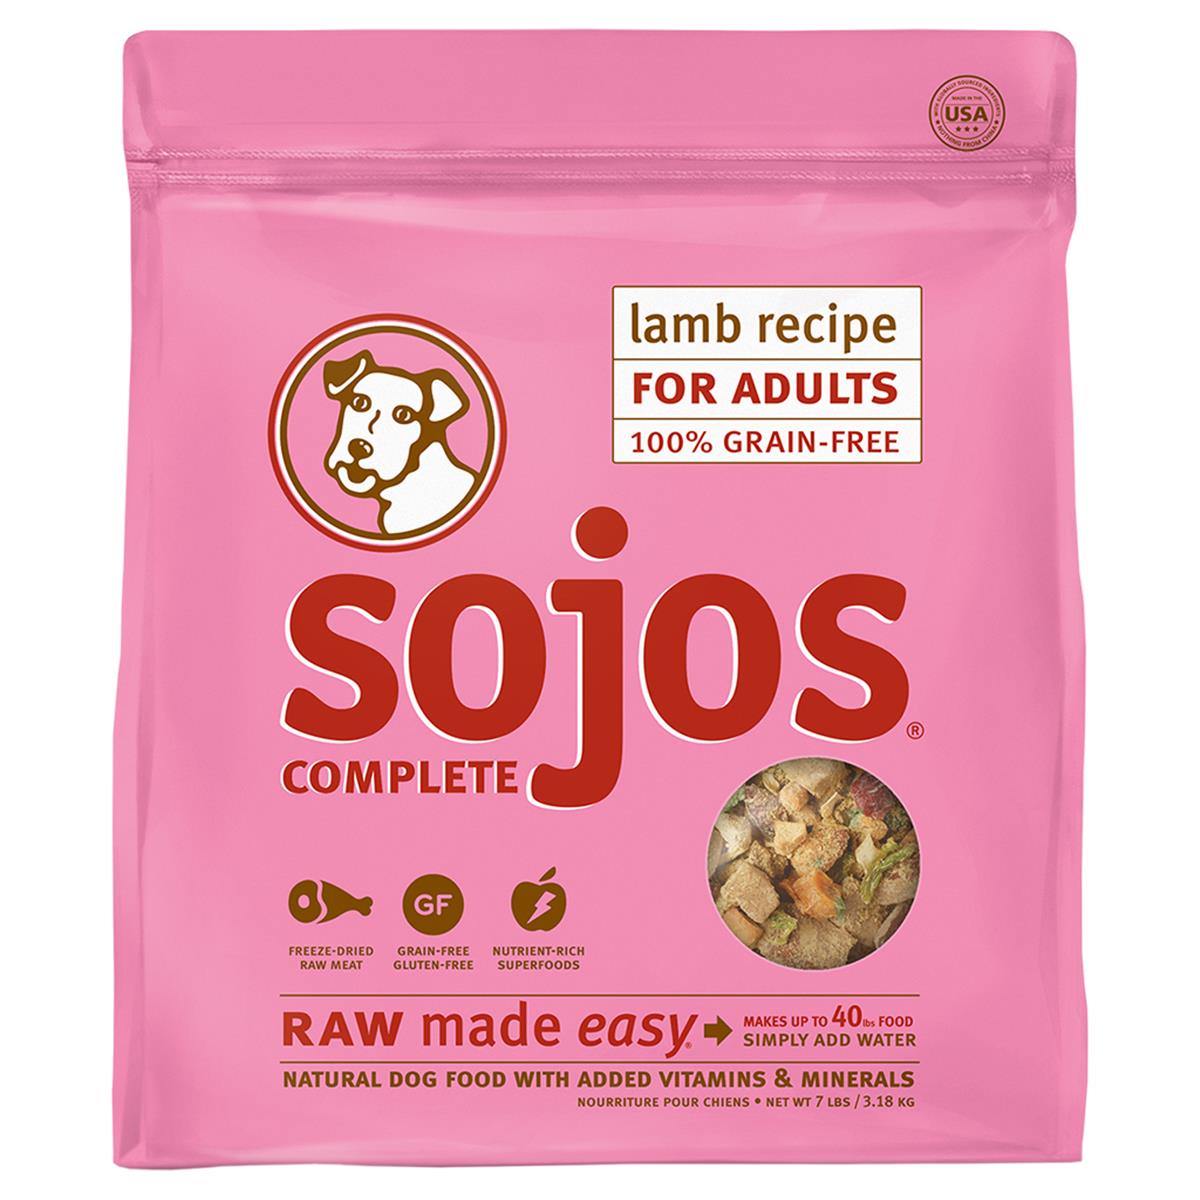 Sj30007 7 Lbs Complete Lamb Recipe Grain-free Dog Food